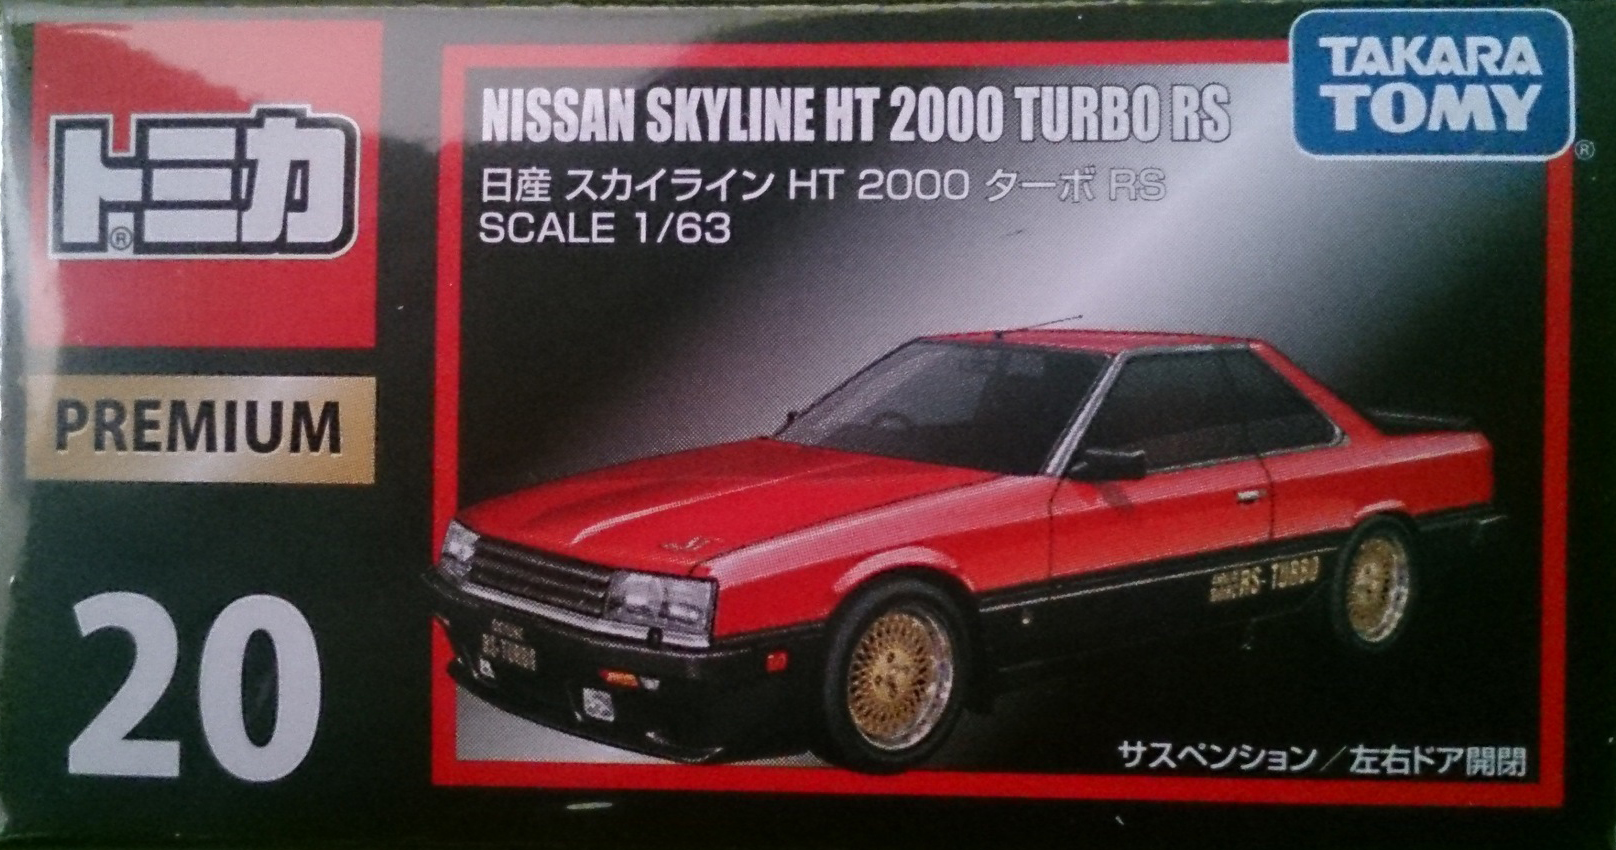 Premium No. 20 Nissan Skyline HT 2000 Turbo RS | Tomica Wiki | Fandom